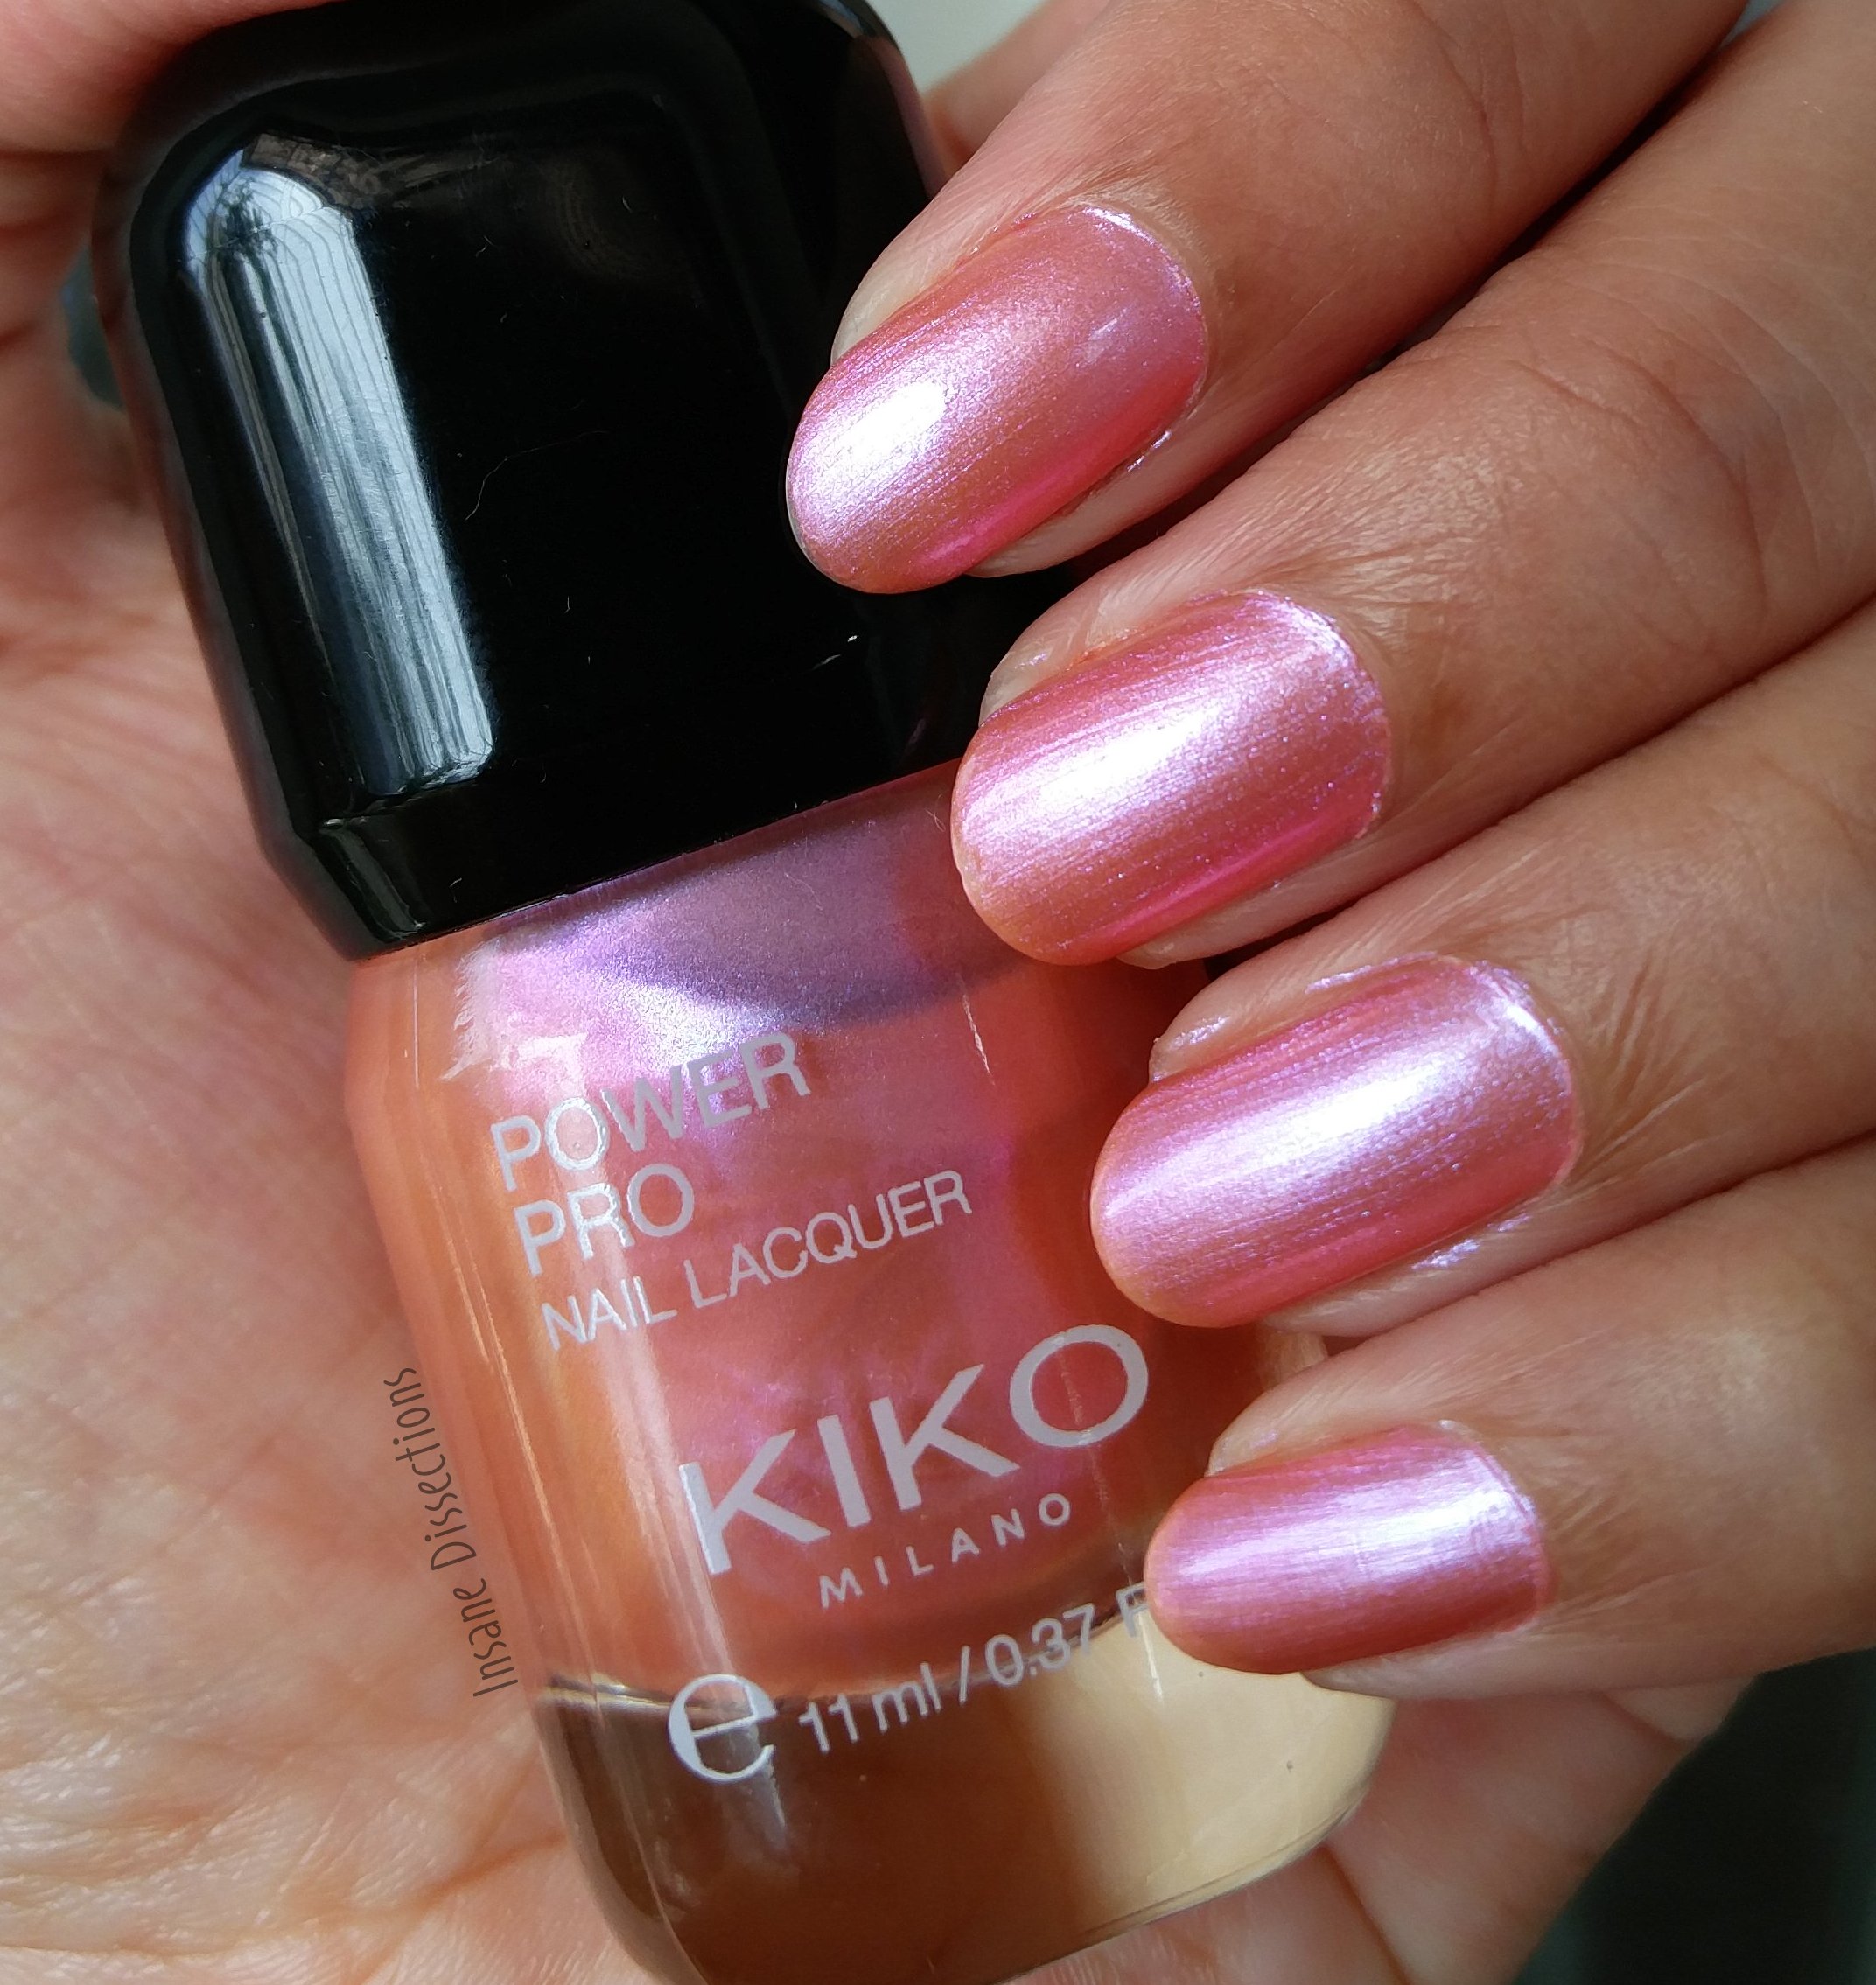 Kiko cosmetics quick dry nail polish review - SoNailicious